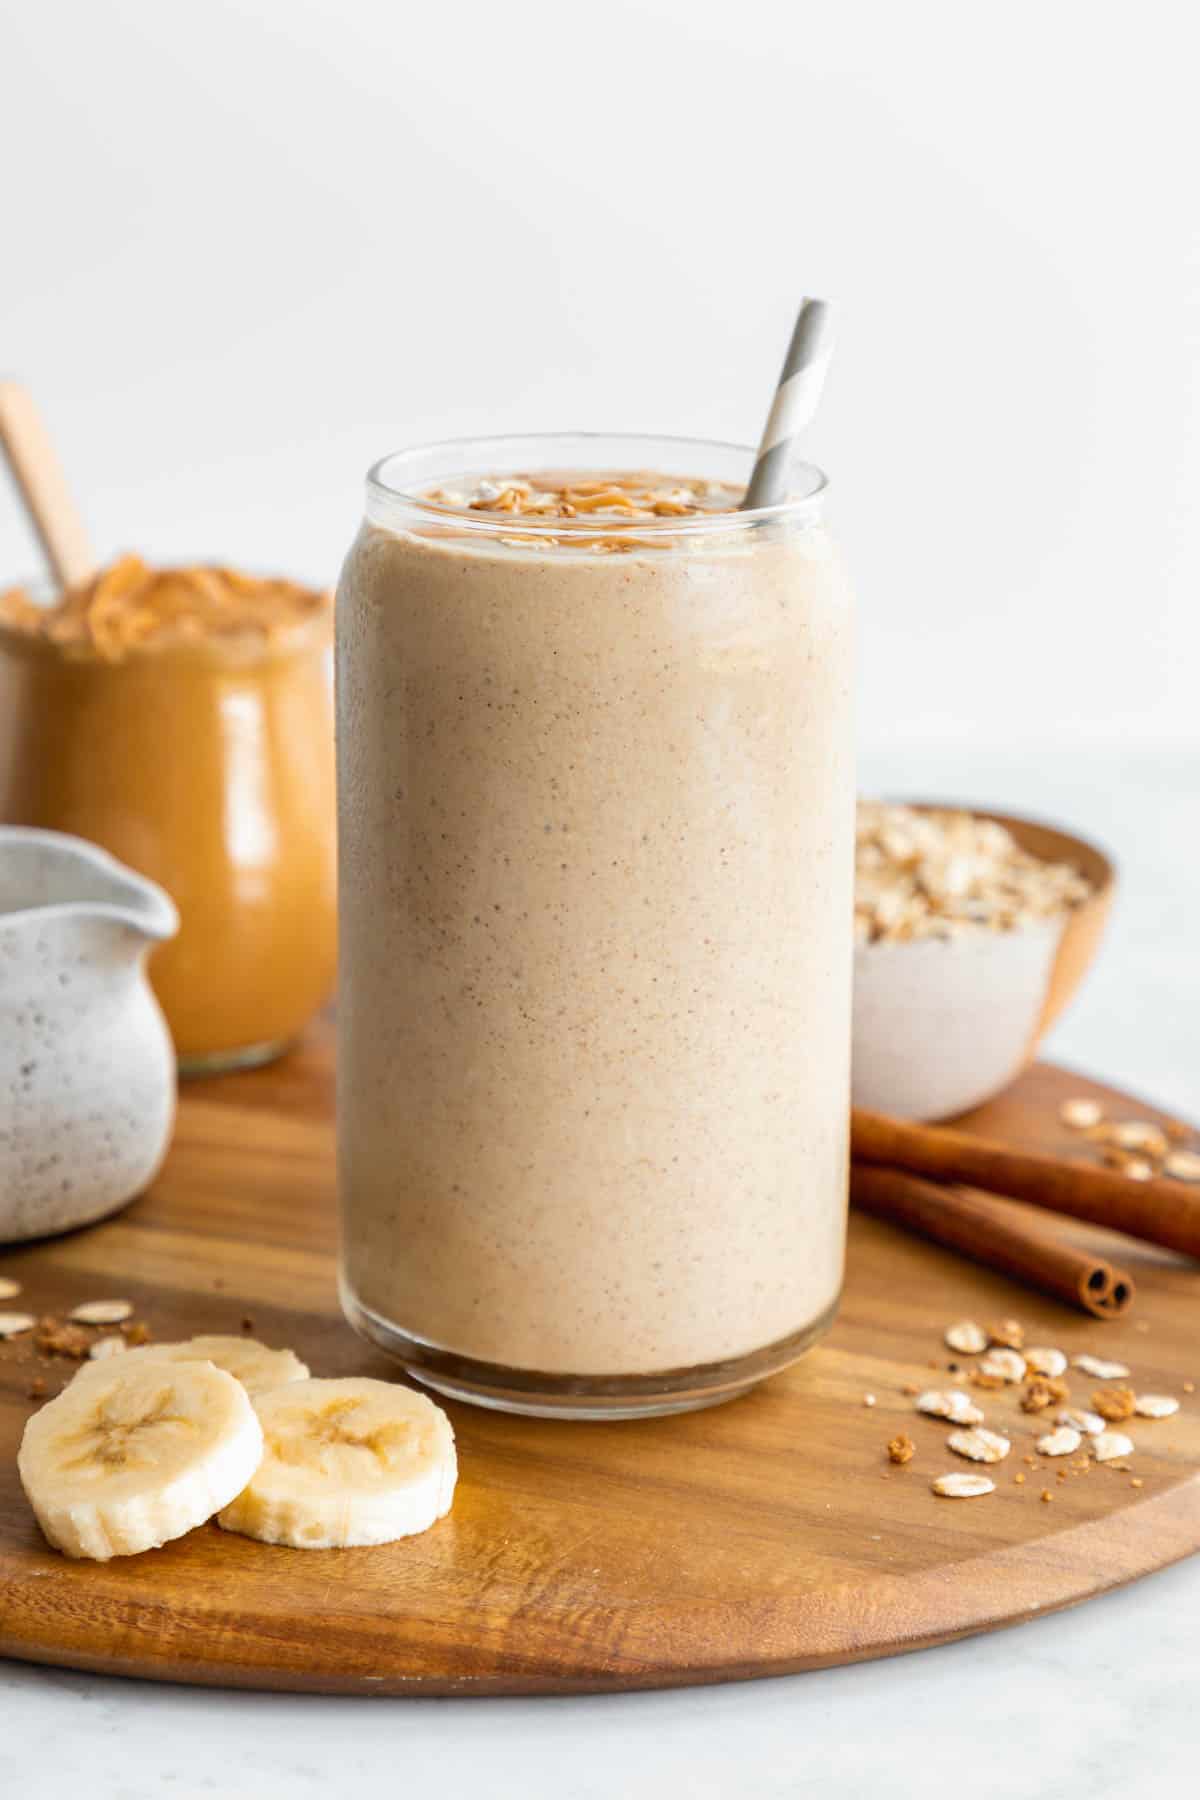 https://www.purelykaylie.com/wp-content/uploads/2021/06/peanut-butter-oatmeal-smoothie-4.jpg